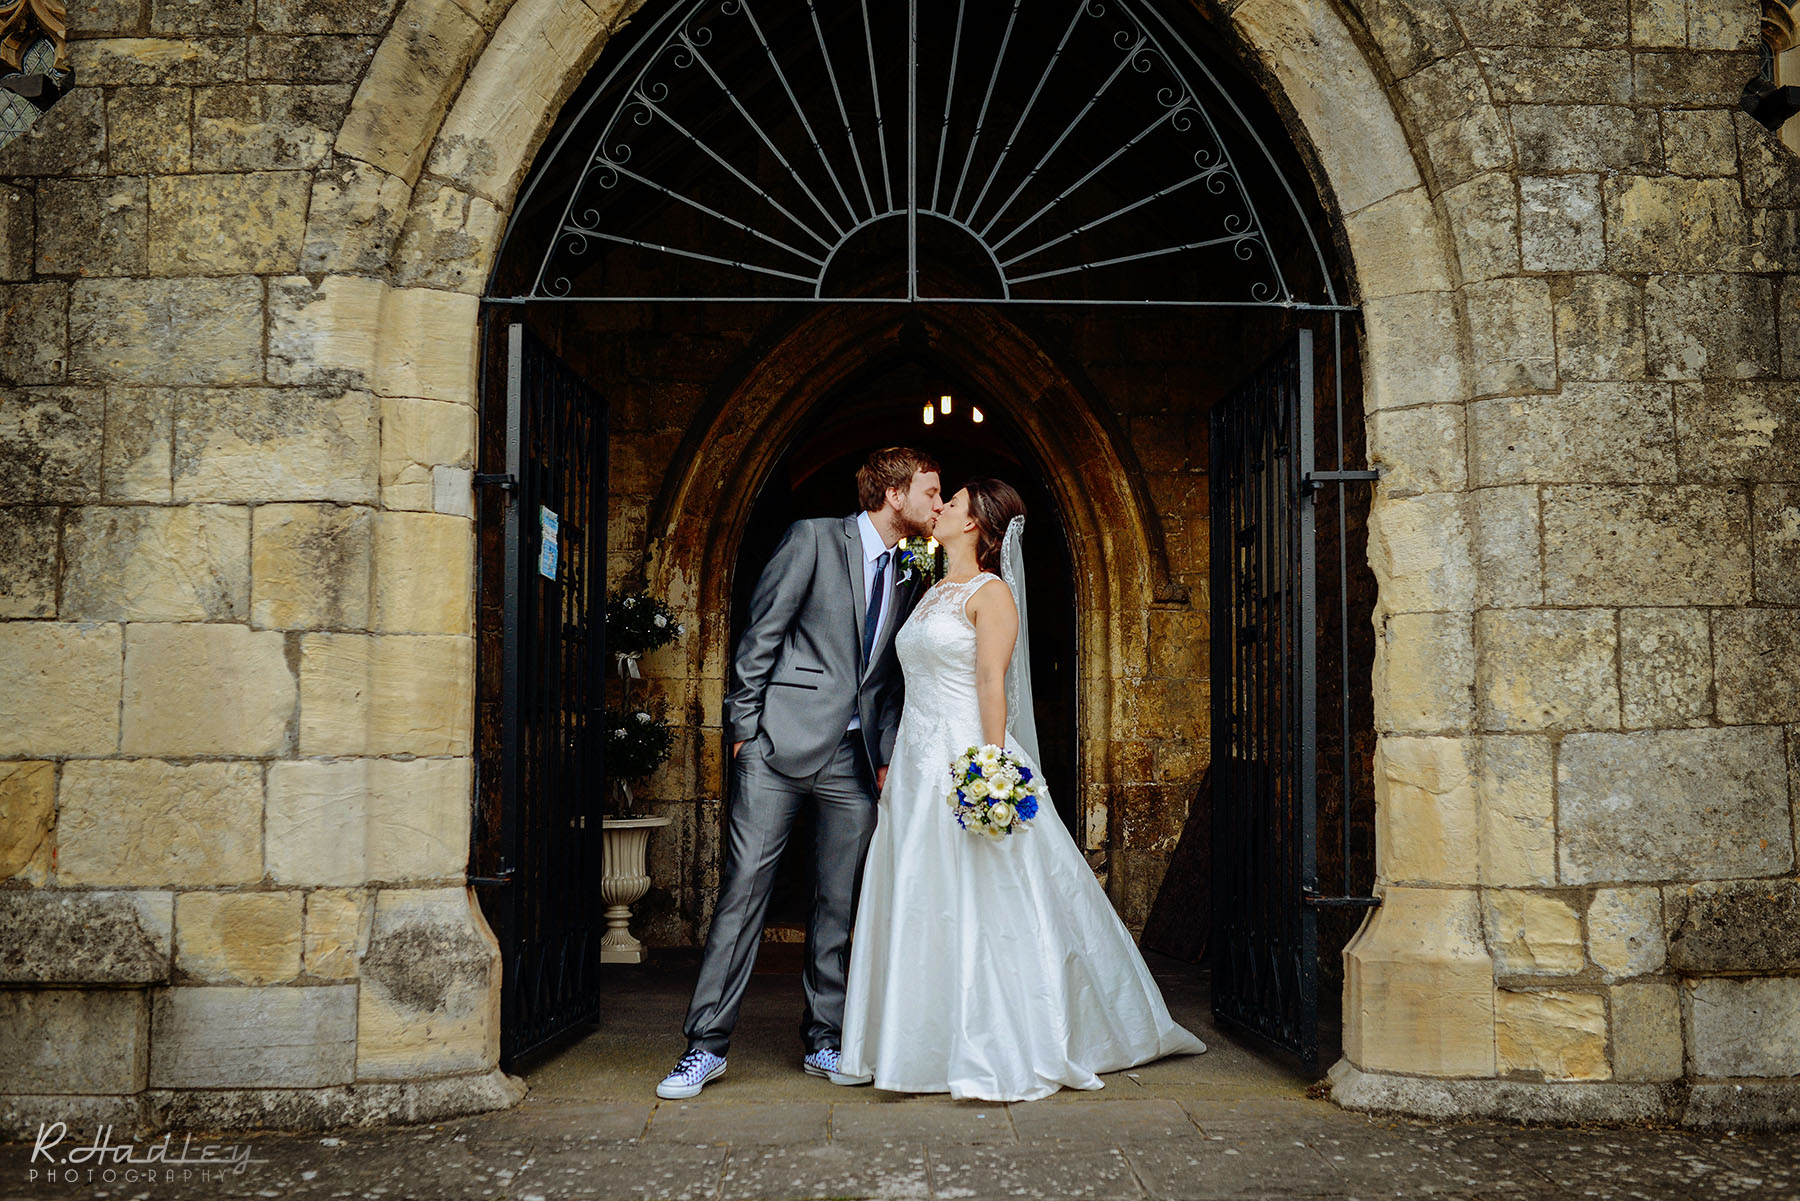 Wedding photographer in Warwickshire and Yorkshire.